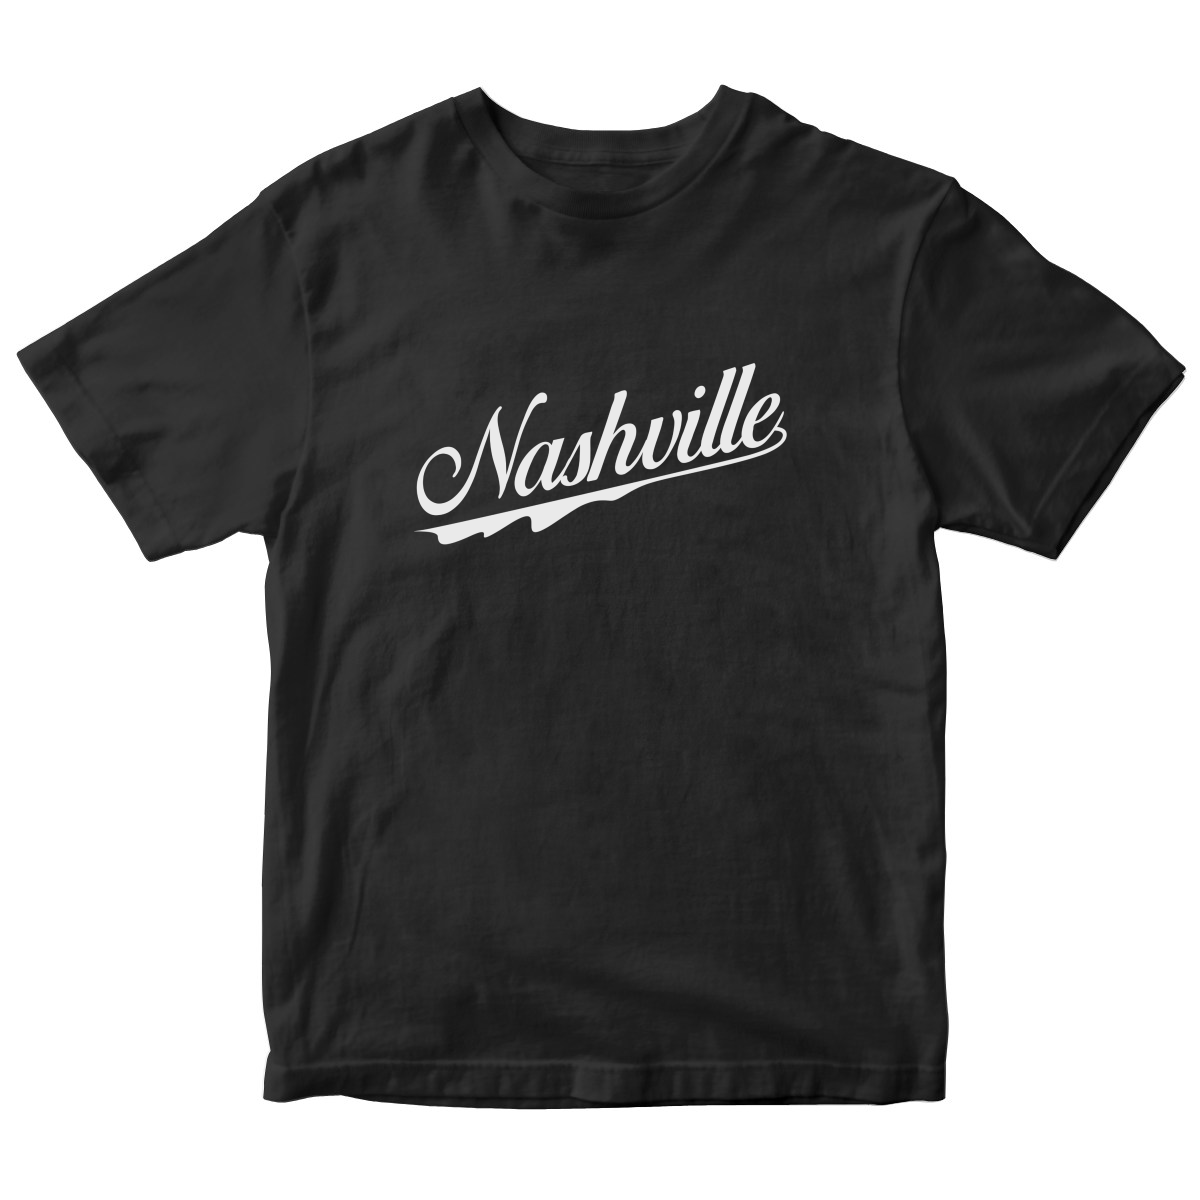 Nashville Kids T-shirt | Black